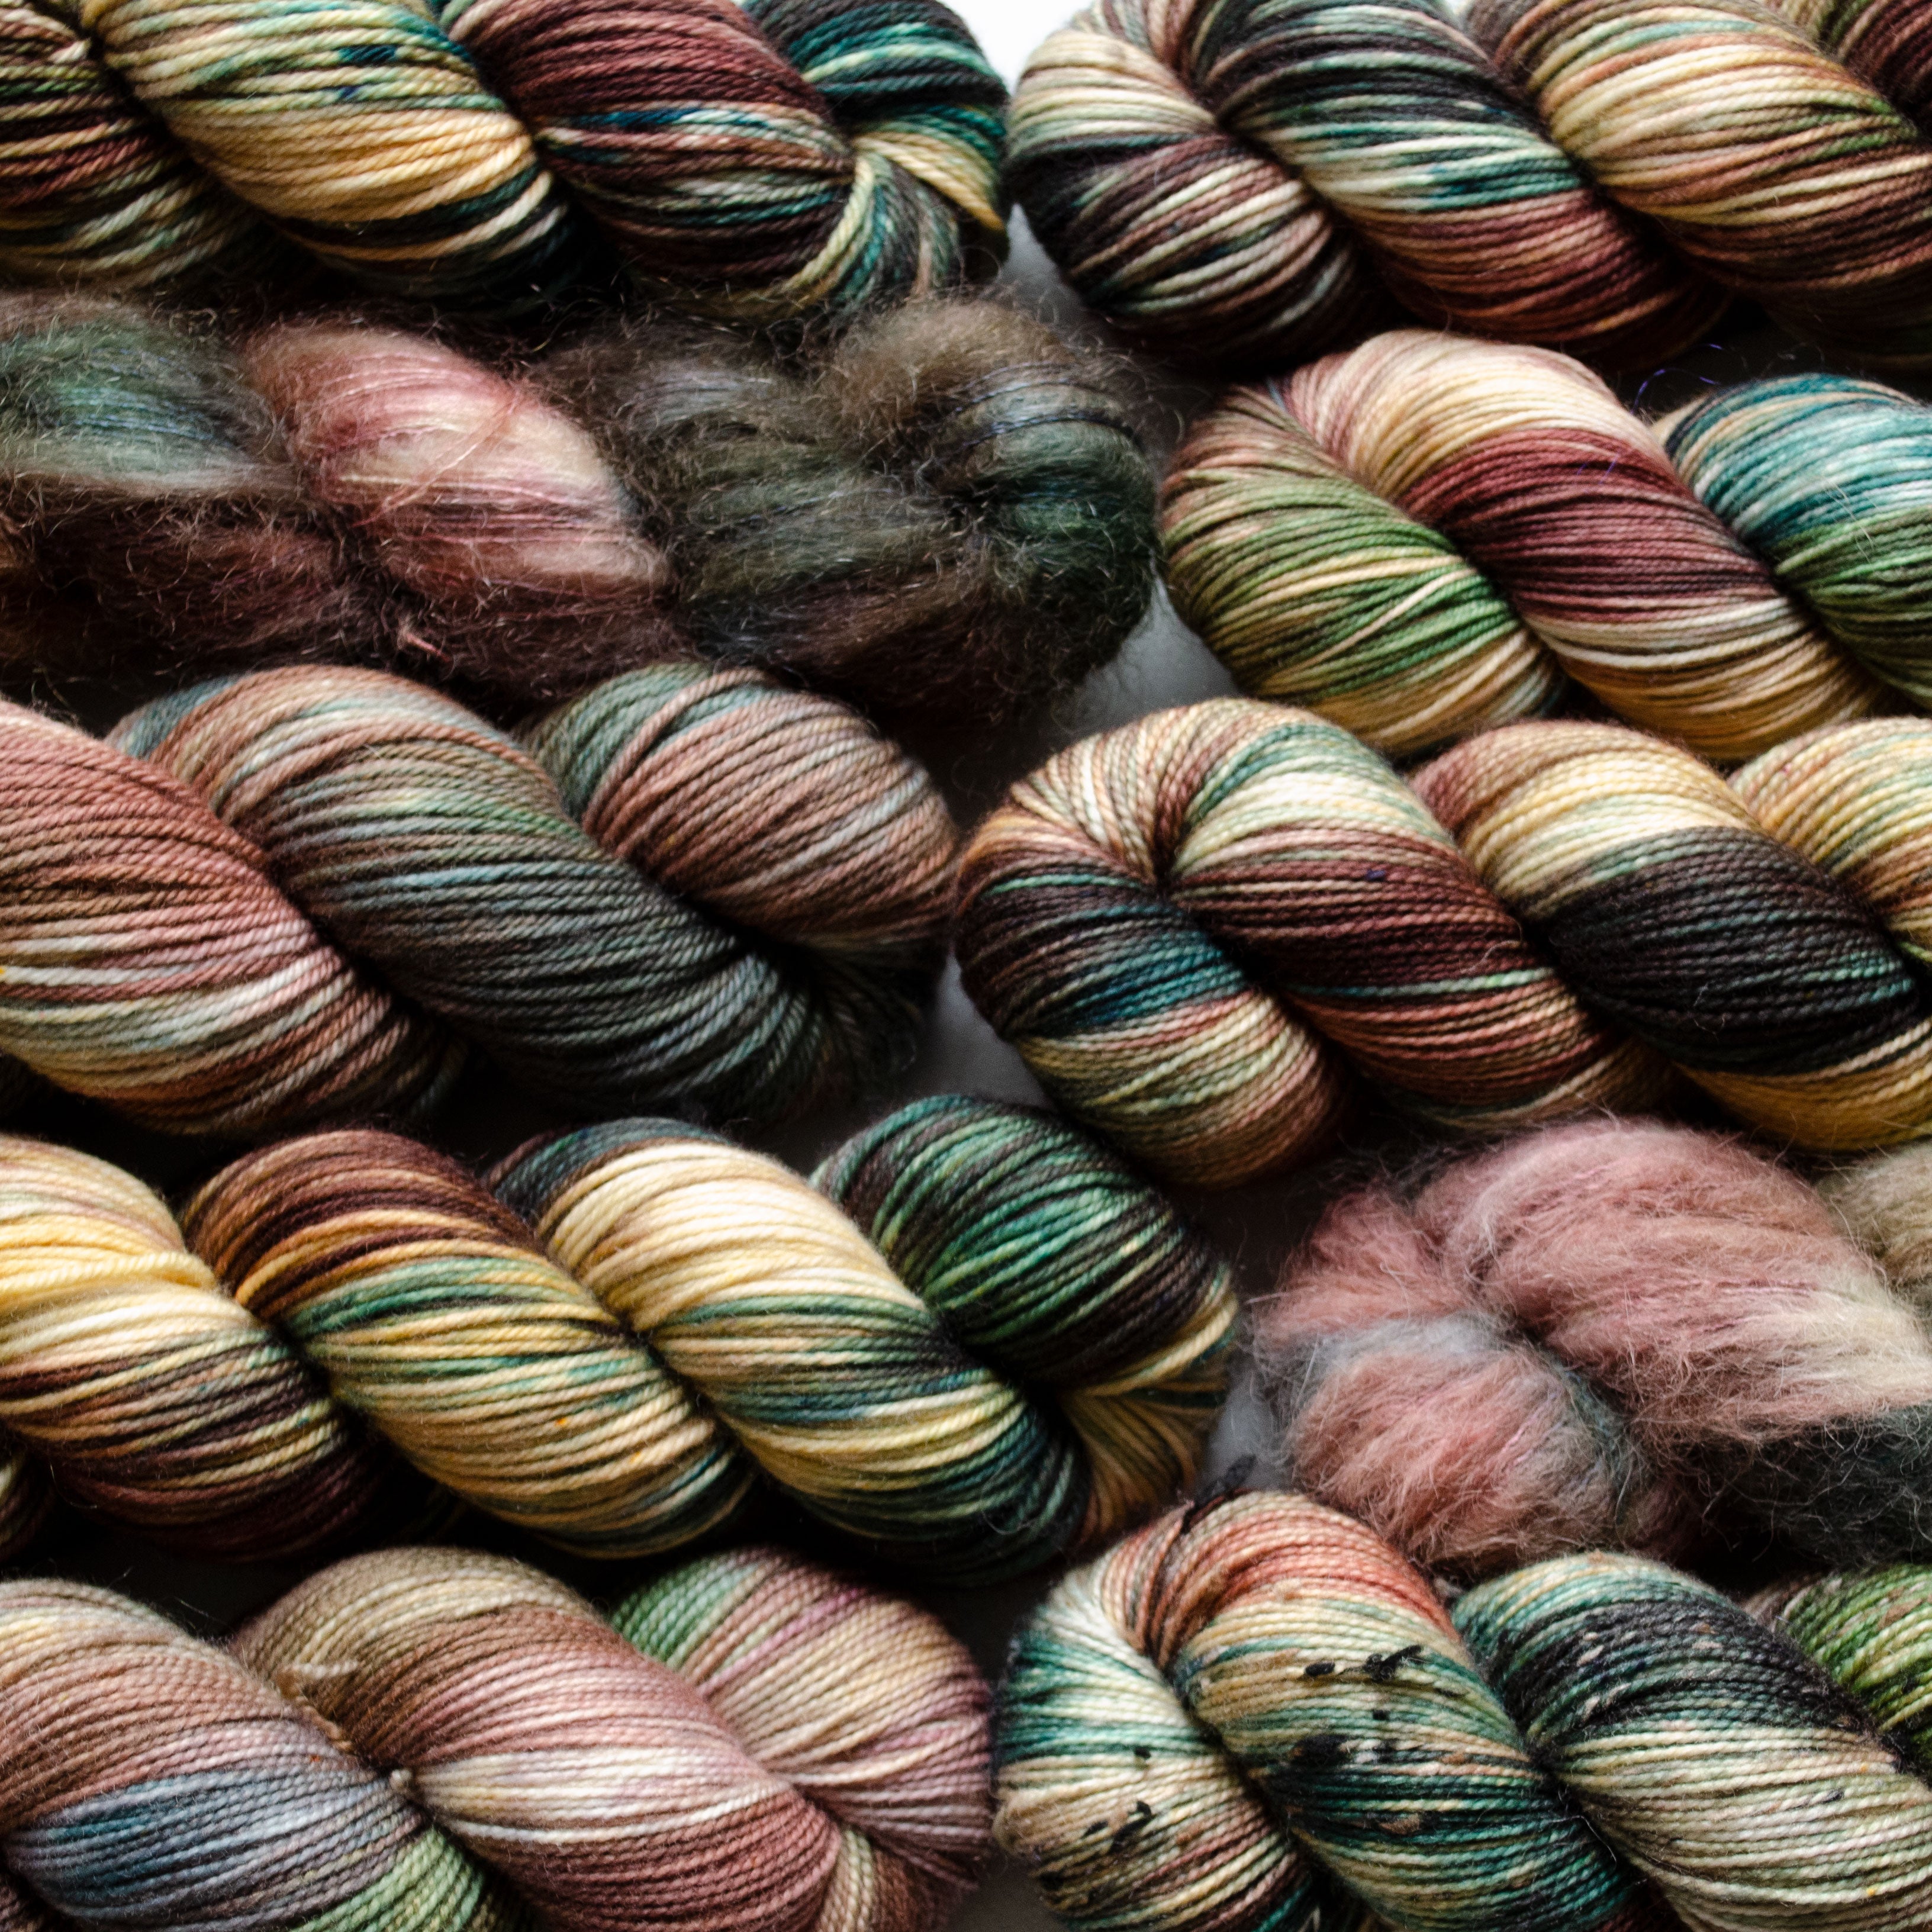 Indian Corn - Hand-dyed Yarn, Sock Yarn, Wool Yarn - Burgundy